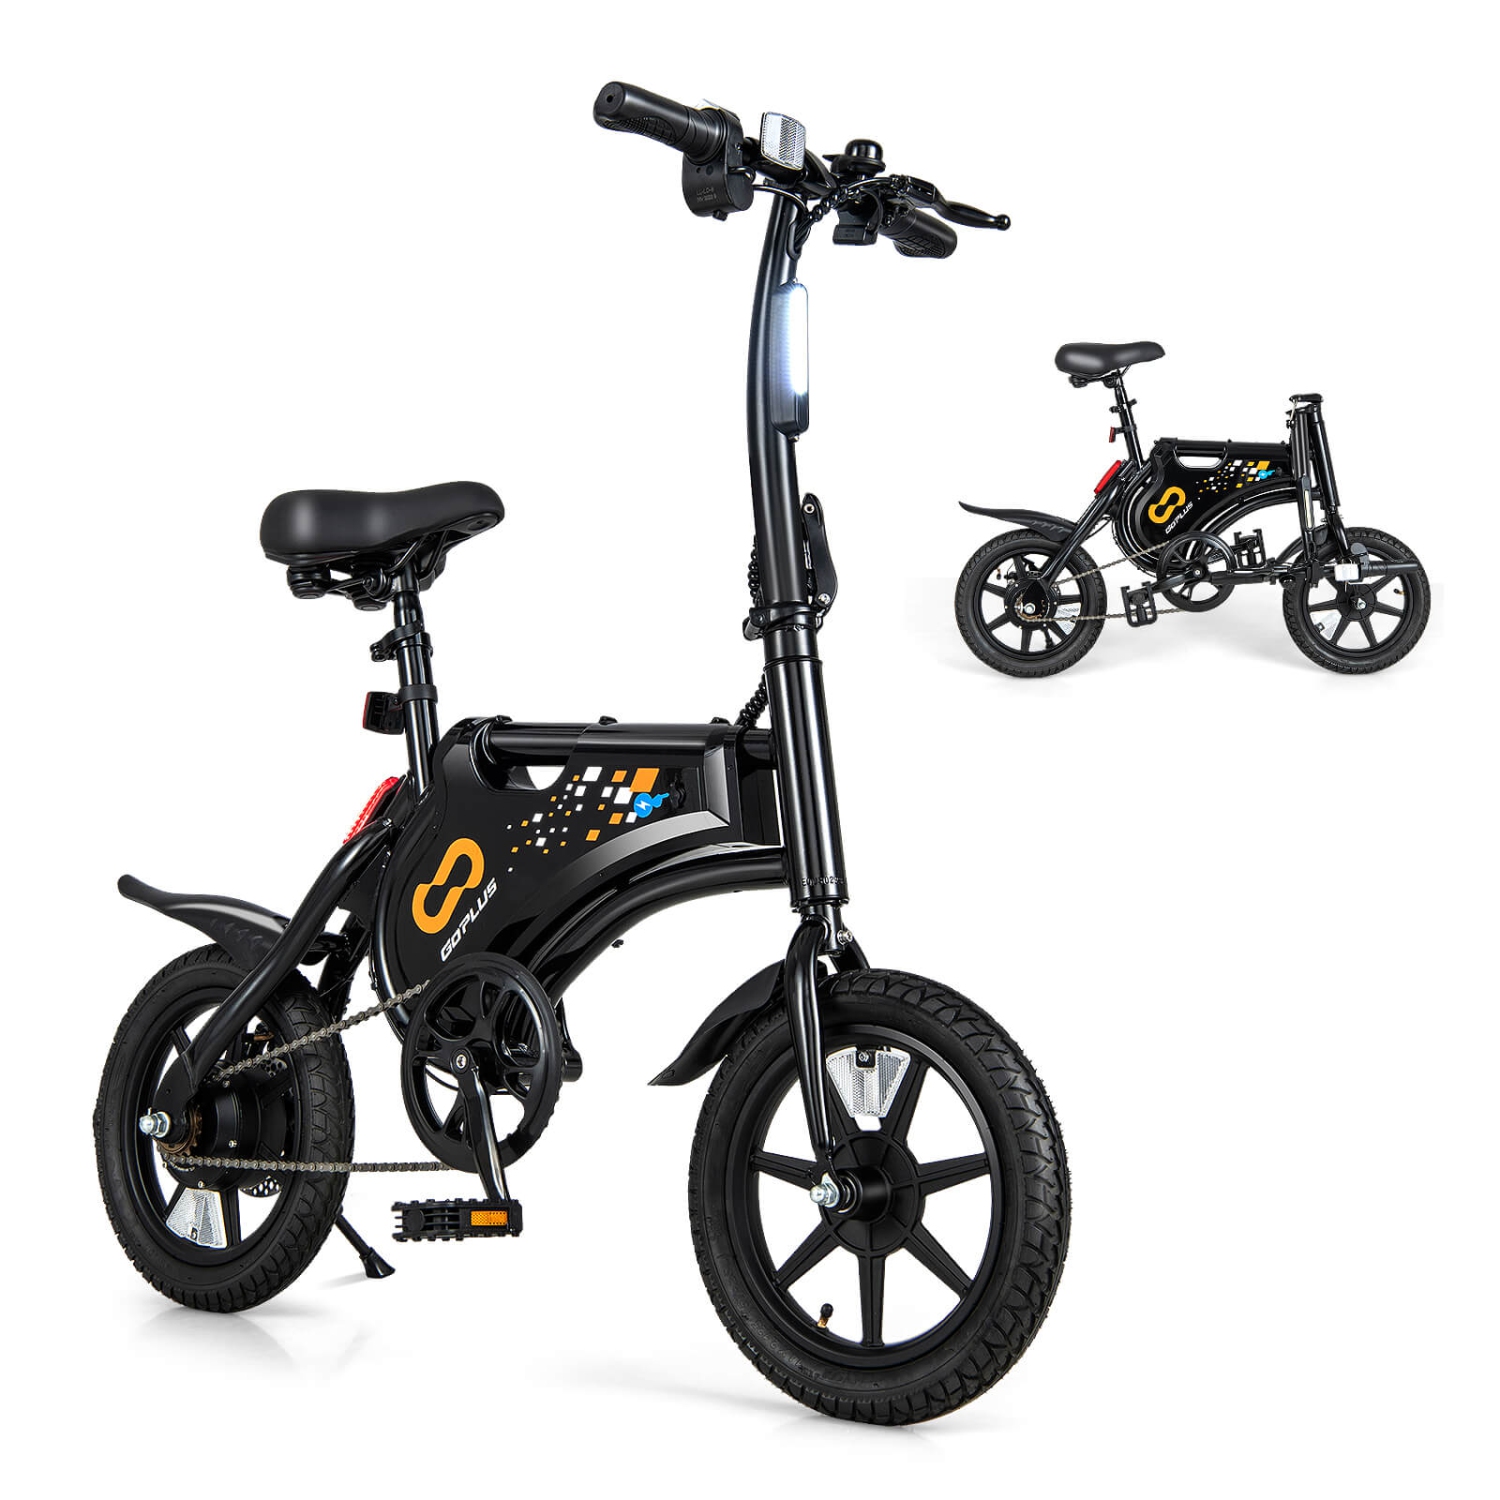 Goplus 14" Folding Electric Bike for Adults with Adjustable Saddle & Portable Handle, 350W Motor, 36V Battery, Range up to 32km